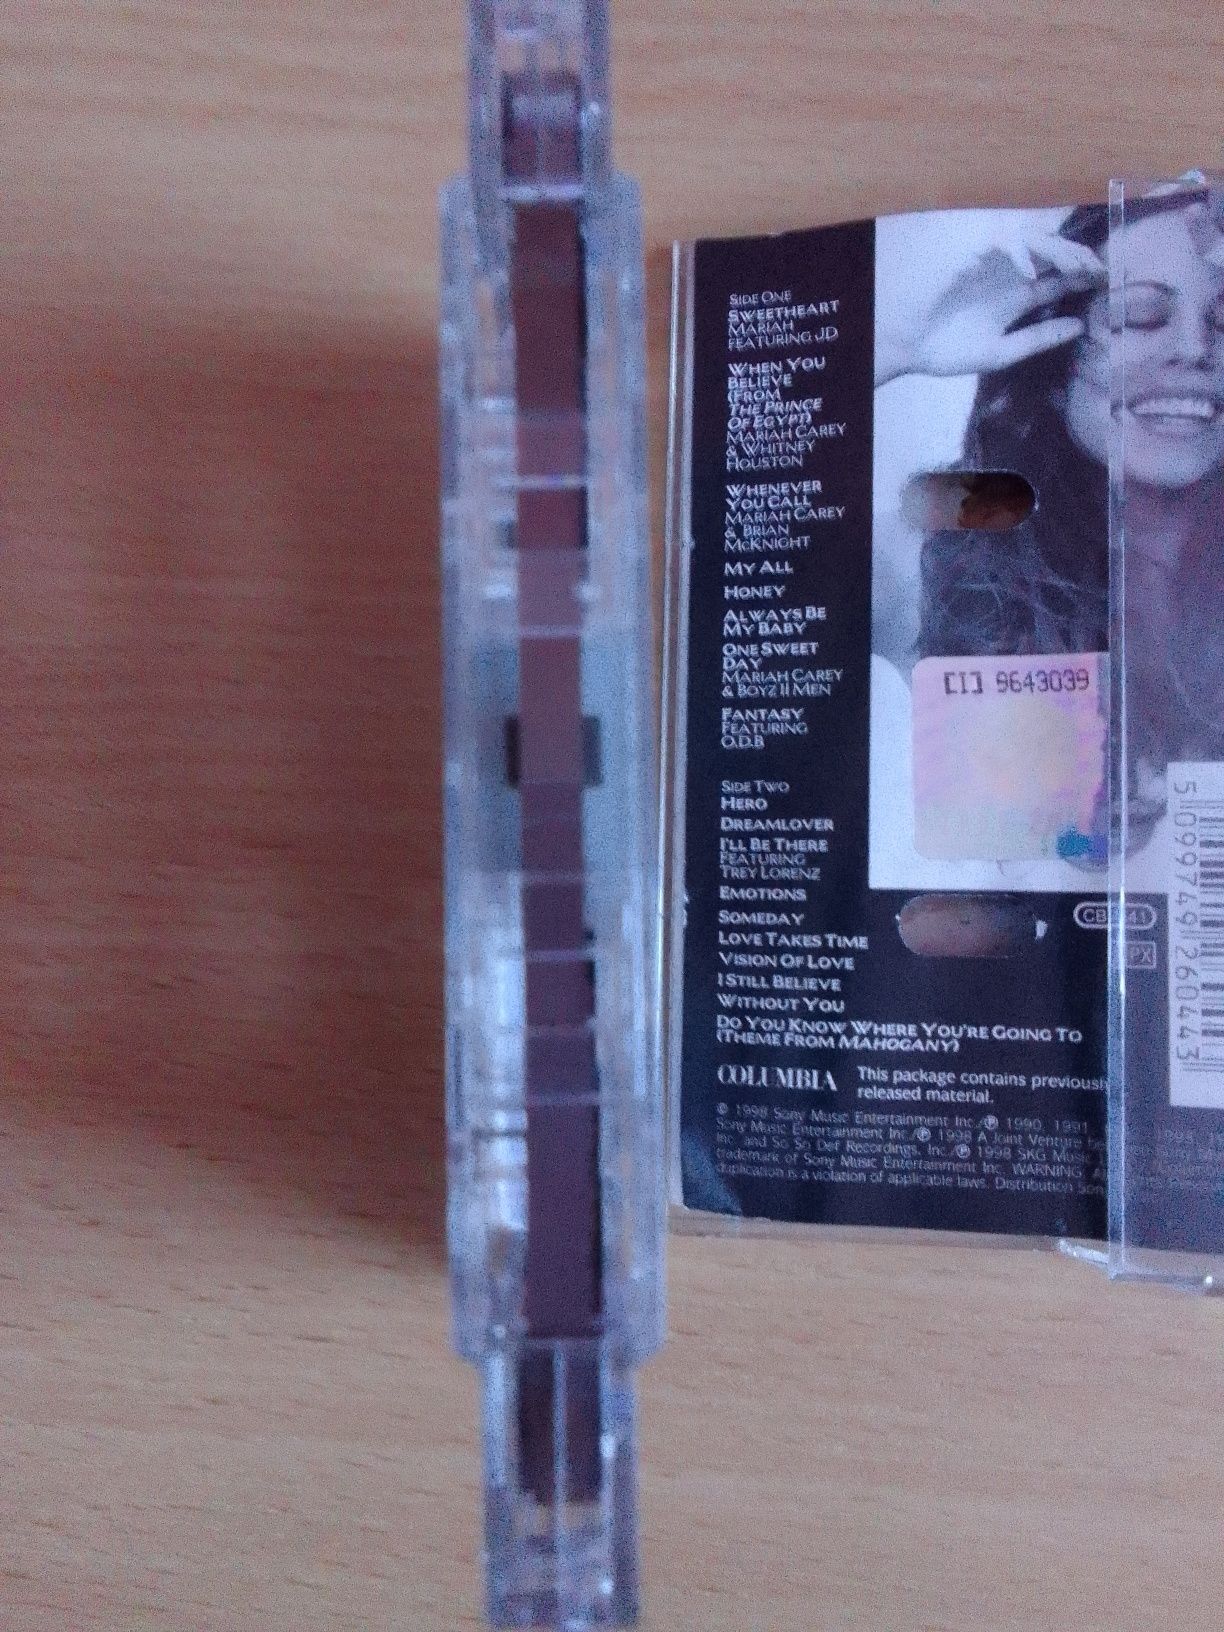 Kaseta audio - Mariah Carey #1's